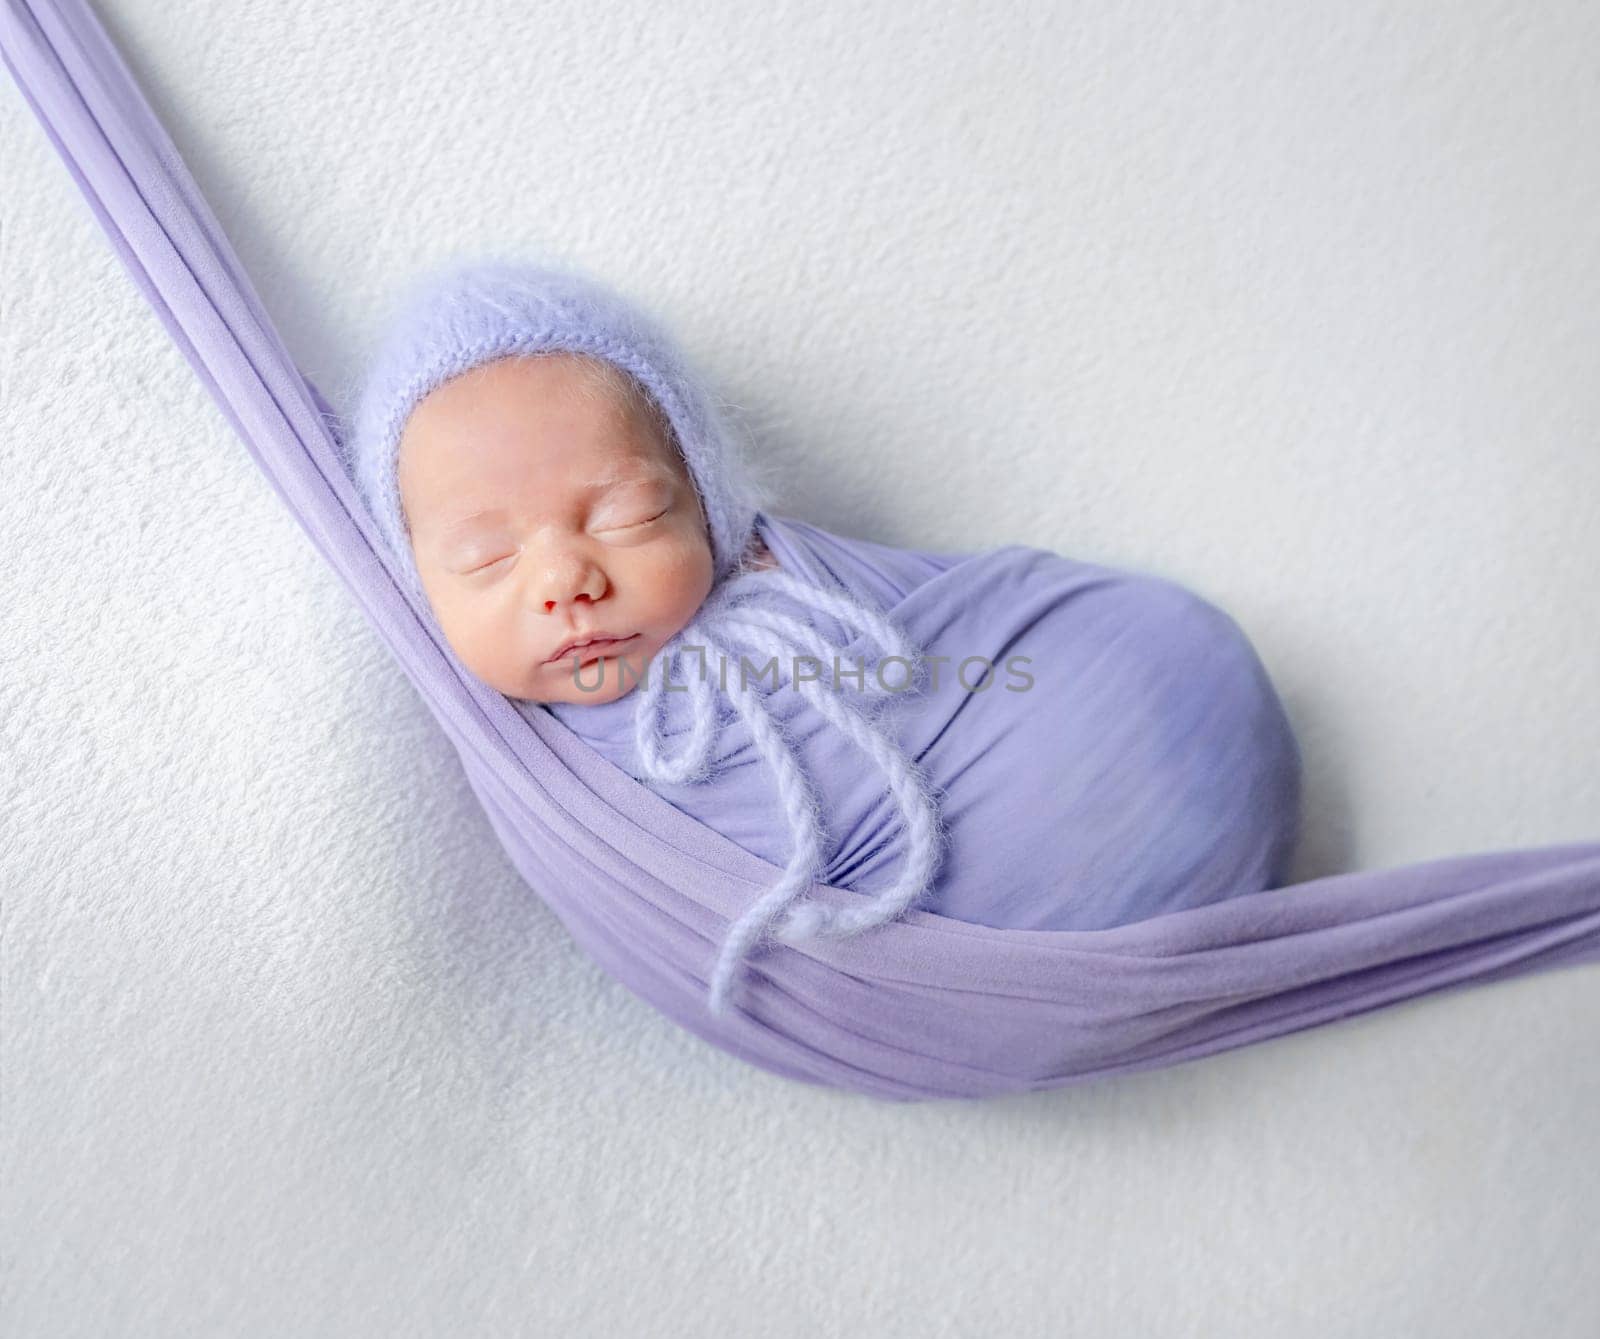 Newborn Baby In Lilac Wrap Sleeps In Hammock During Studio Photoshoot